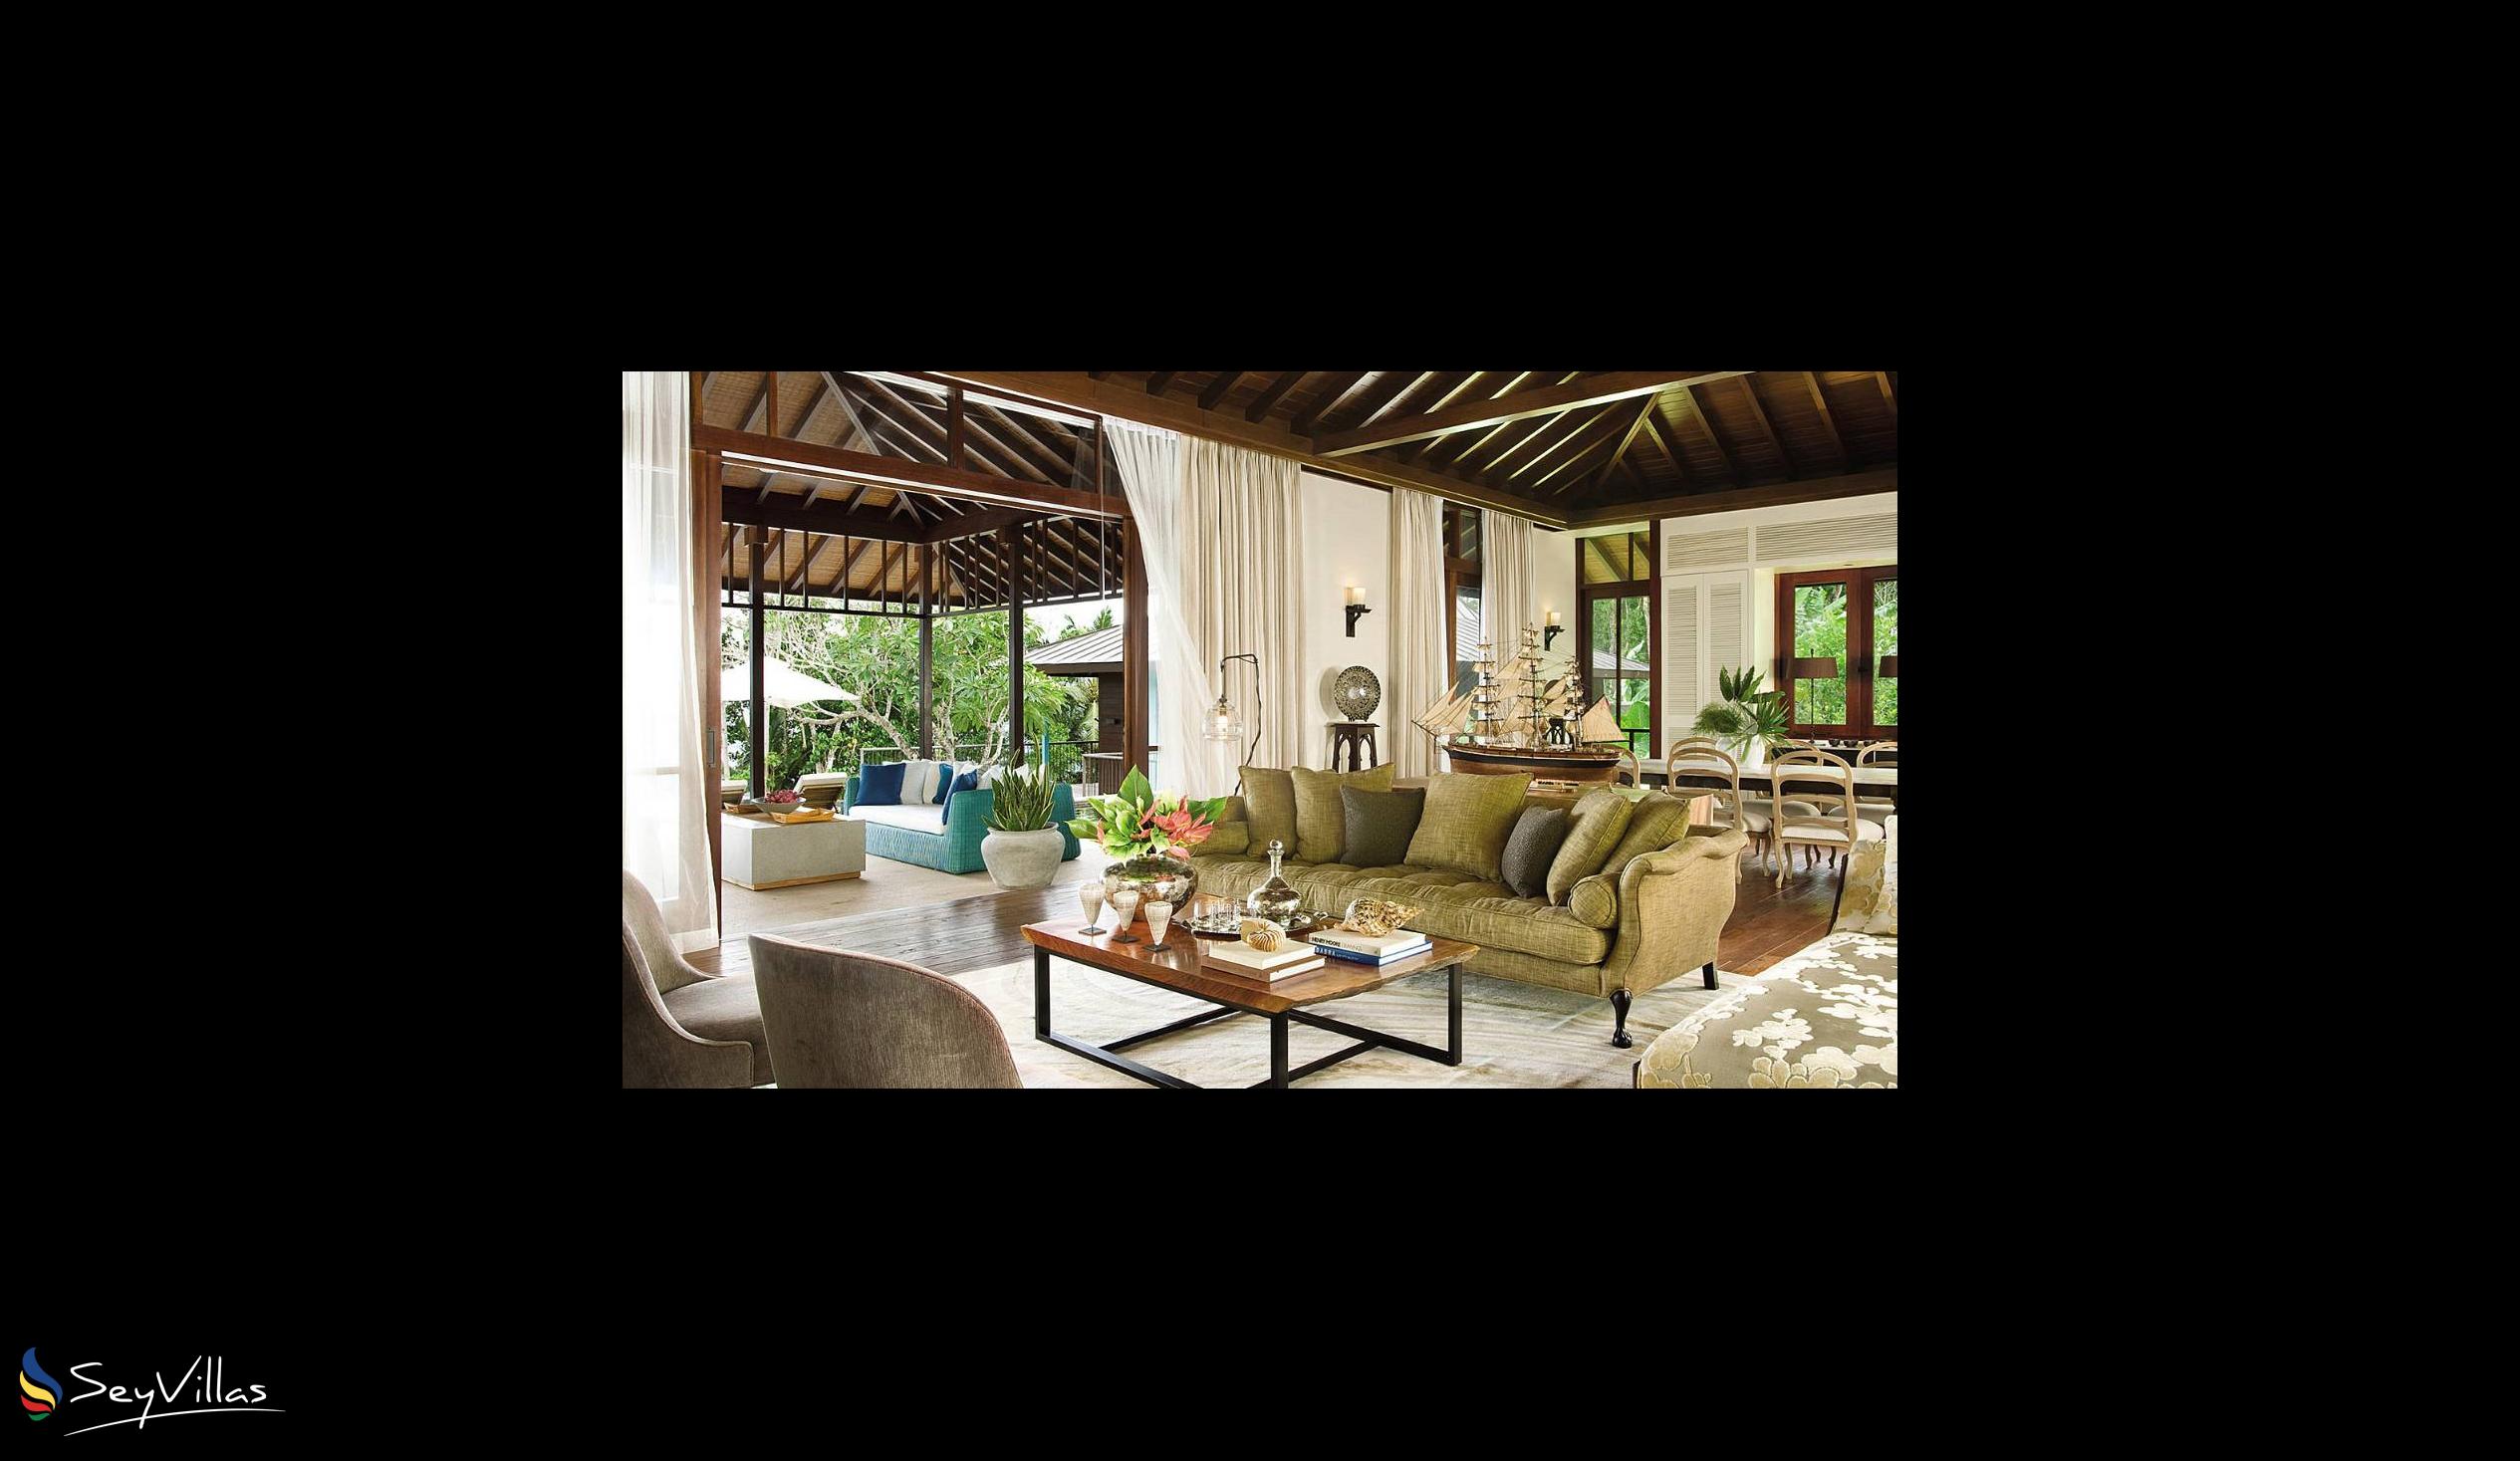 Photo 59: Four Seasons Resort - 3-Bedroom Presidential Suite - Mahé (Seychelles)